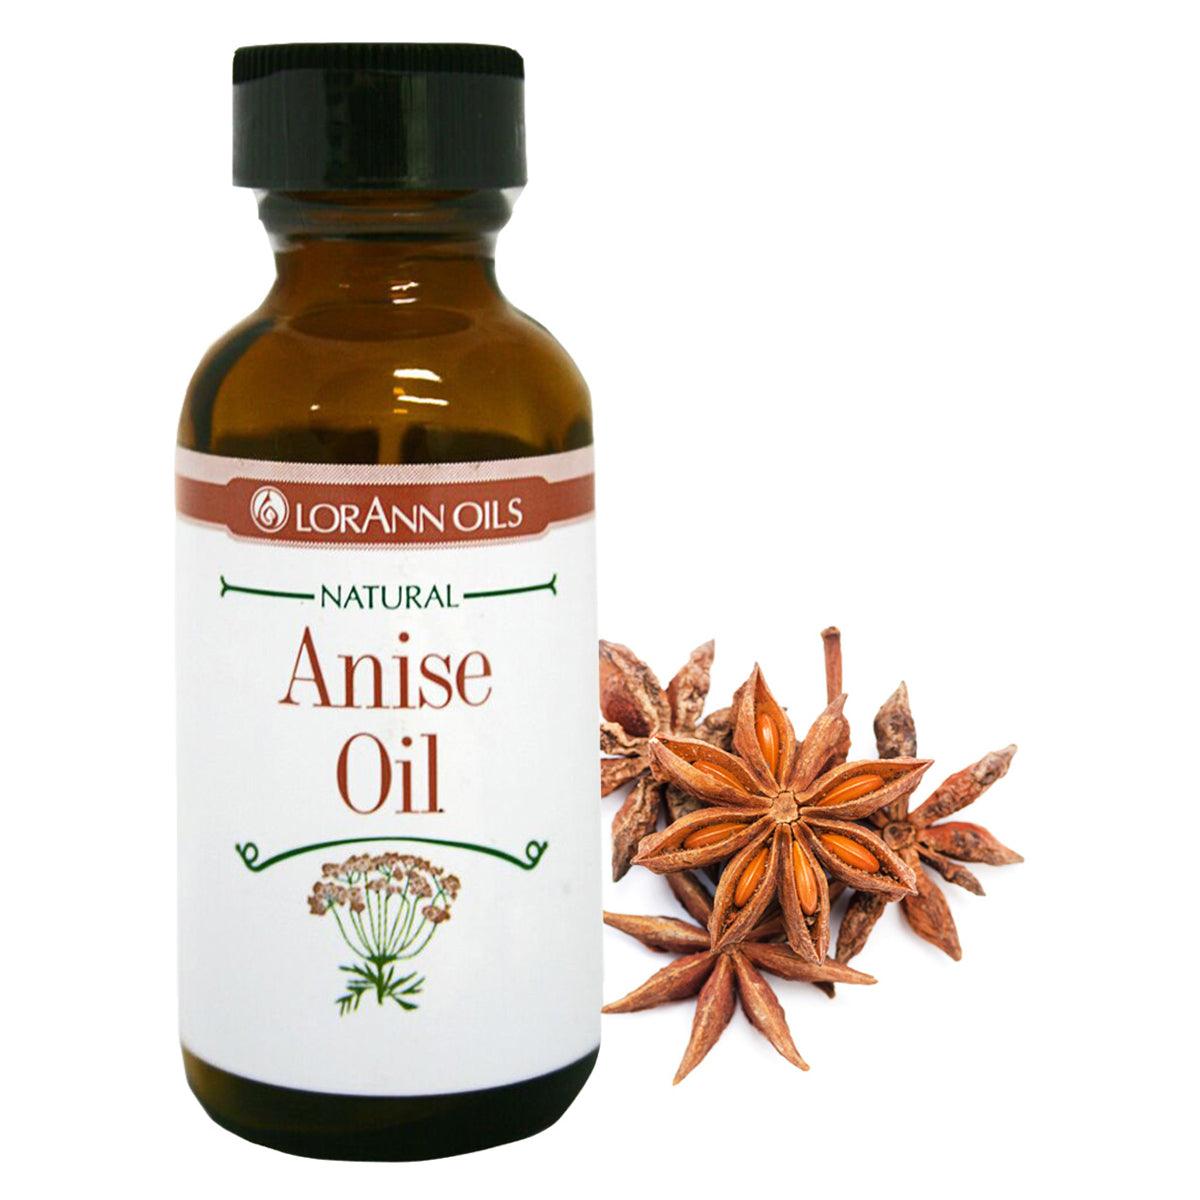 Anise Oil Natural Flavor 1 oz. (29.57 ml) - ViaCheff.com